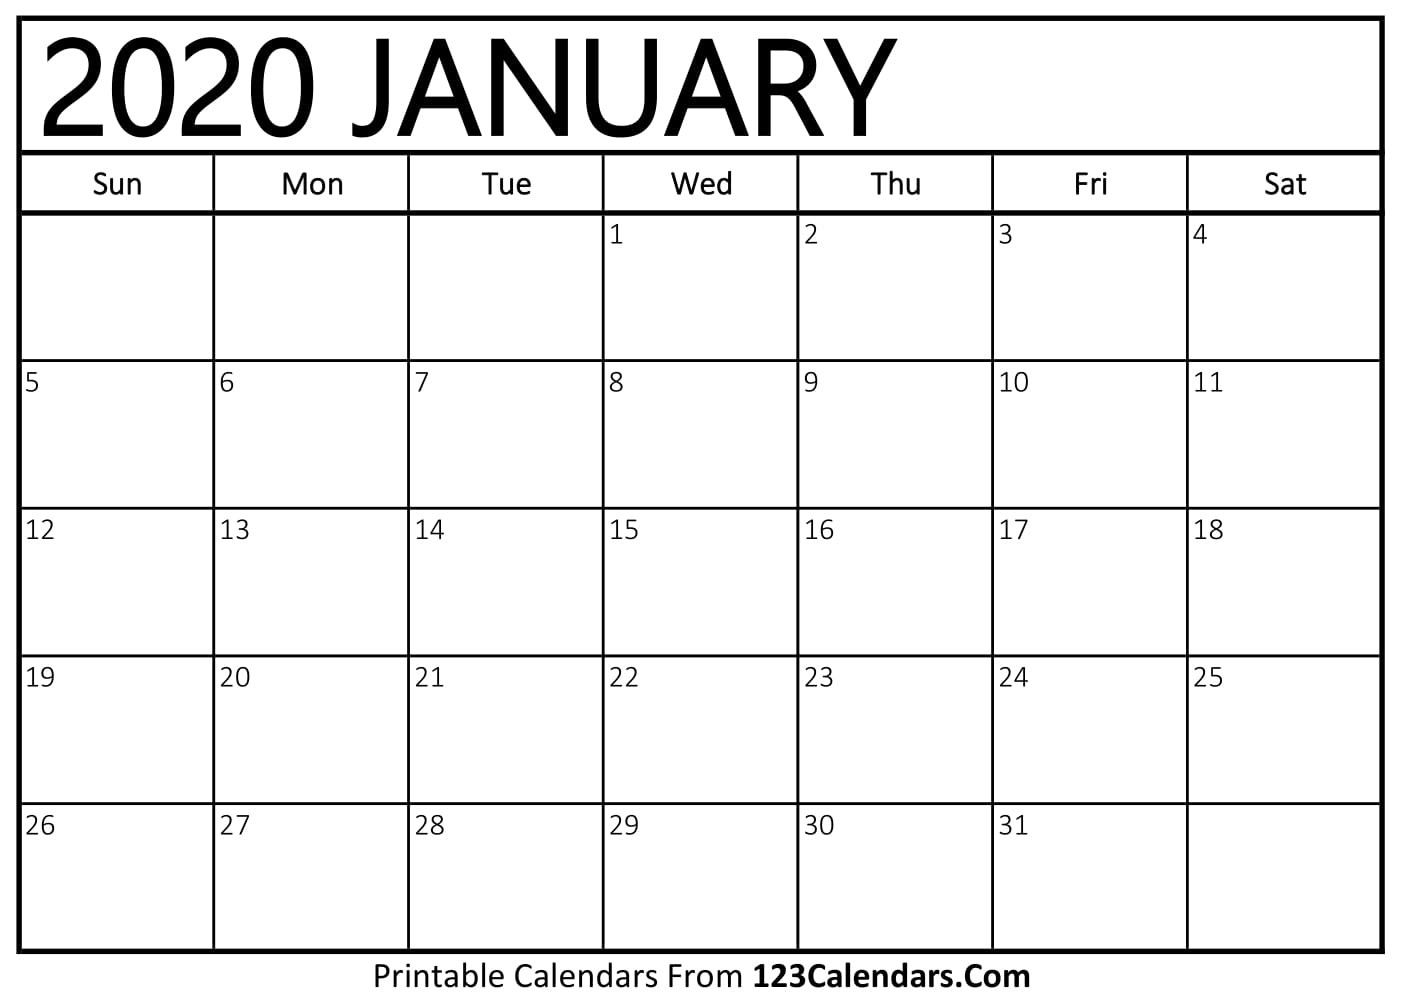 Free Printable Calendar | 123Calendars  Free Printable Monthly Calendar That Can Be Edited